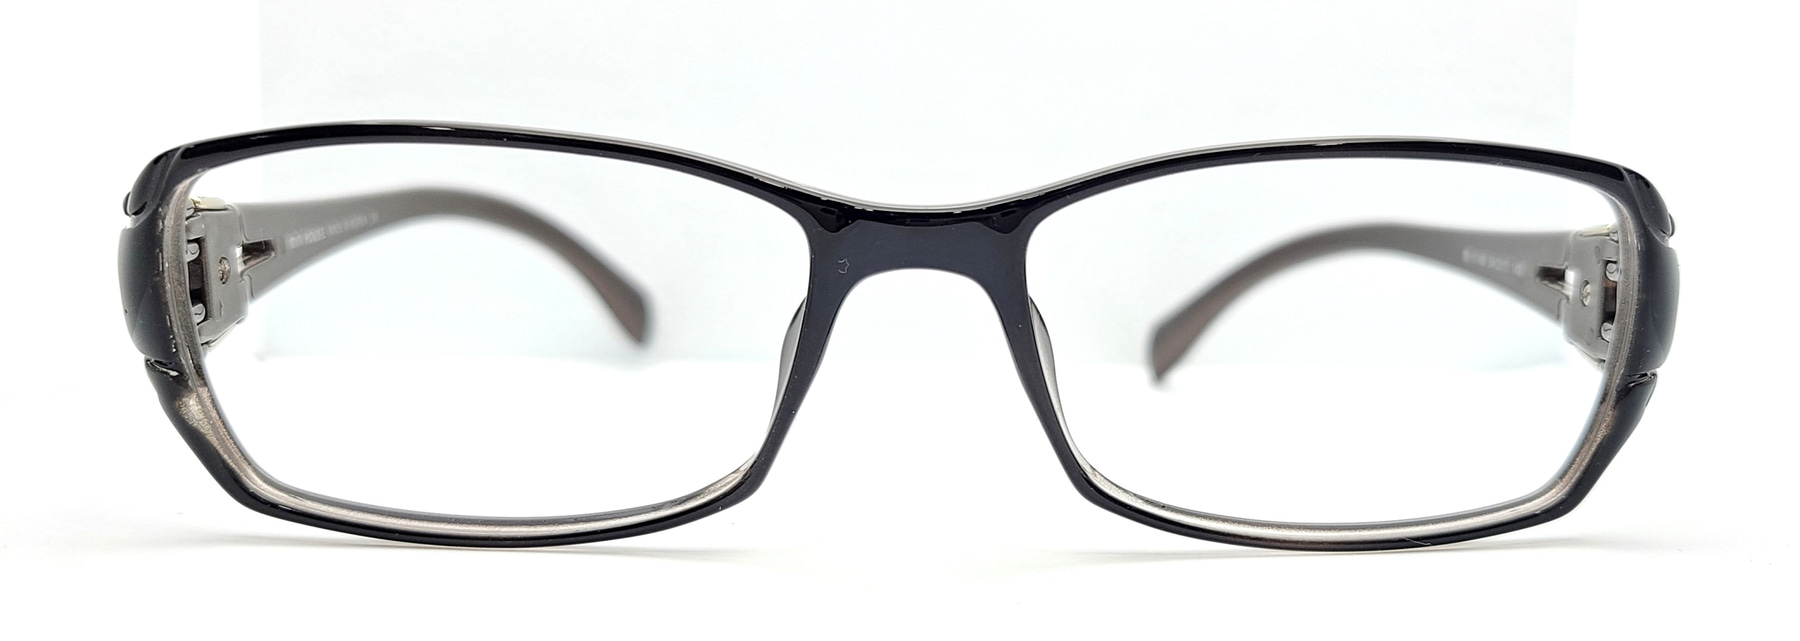 MINIHOUSE M-1169, Korean glasses, sunglasses, eyeglasses, glasses